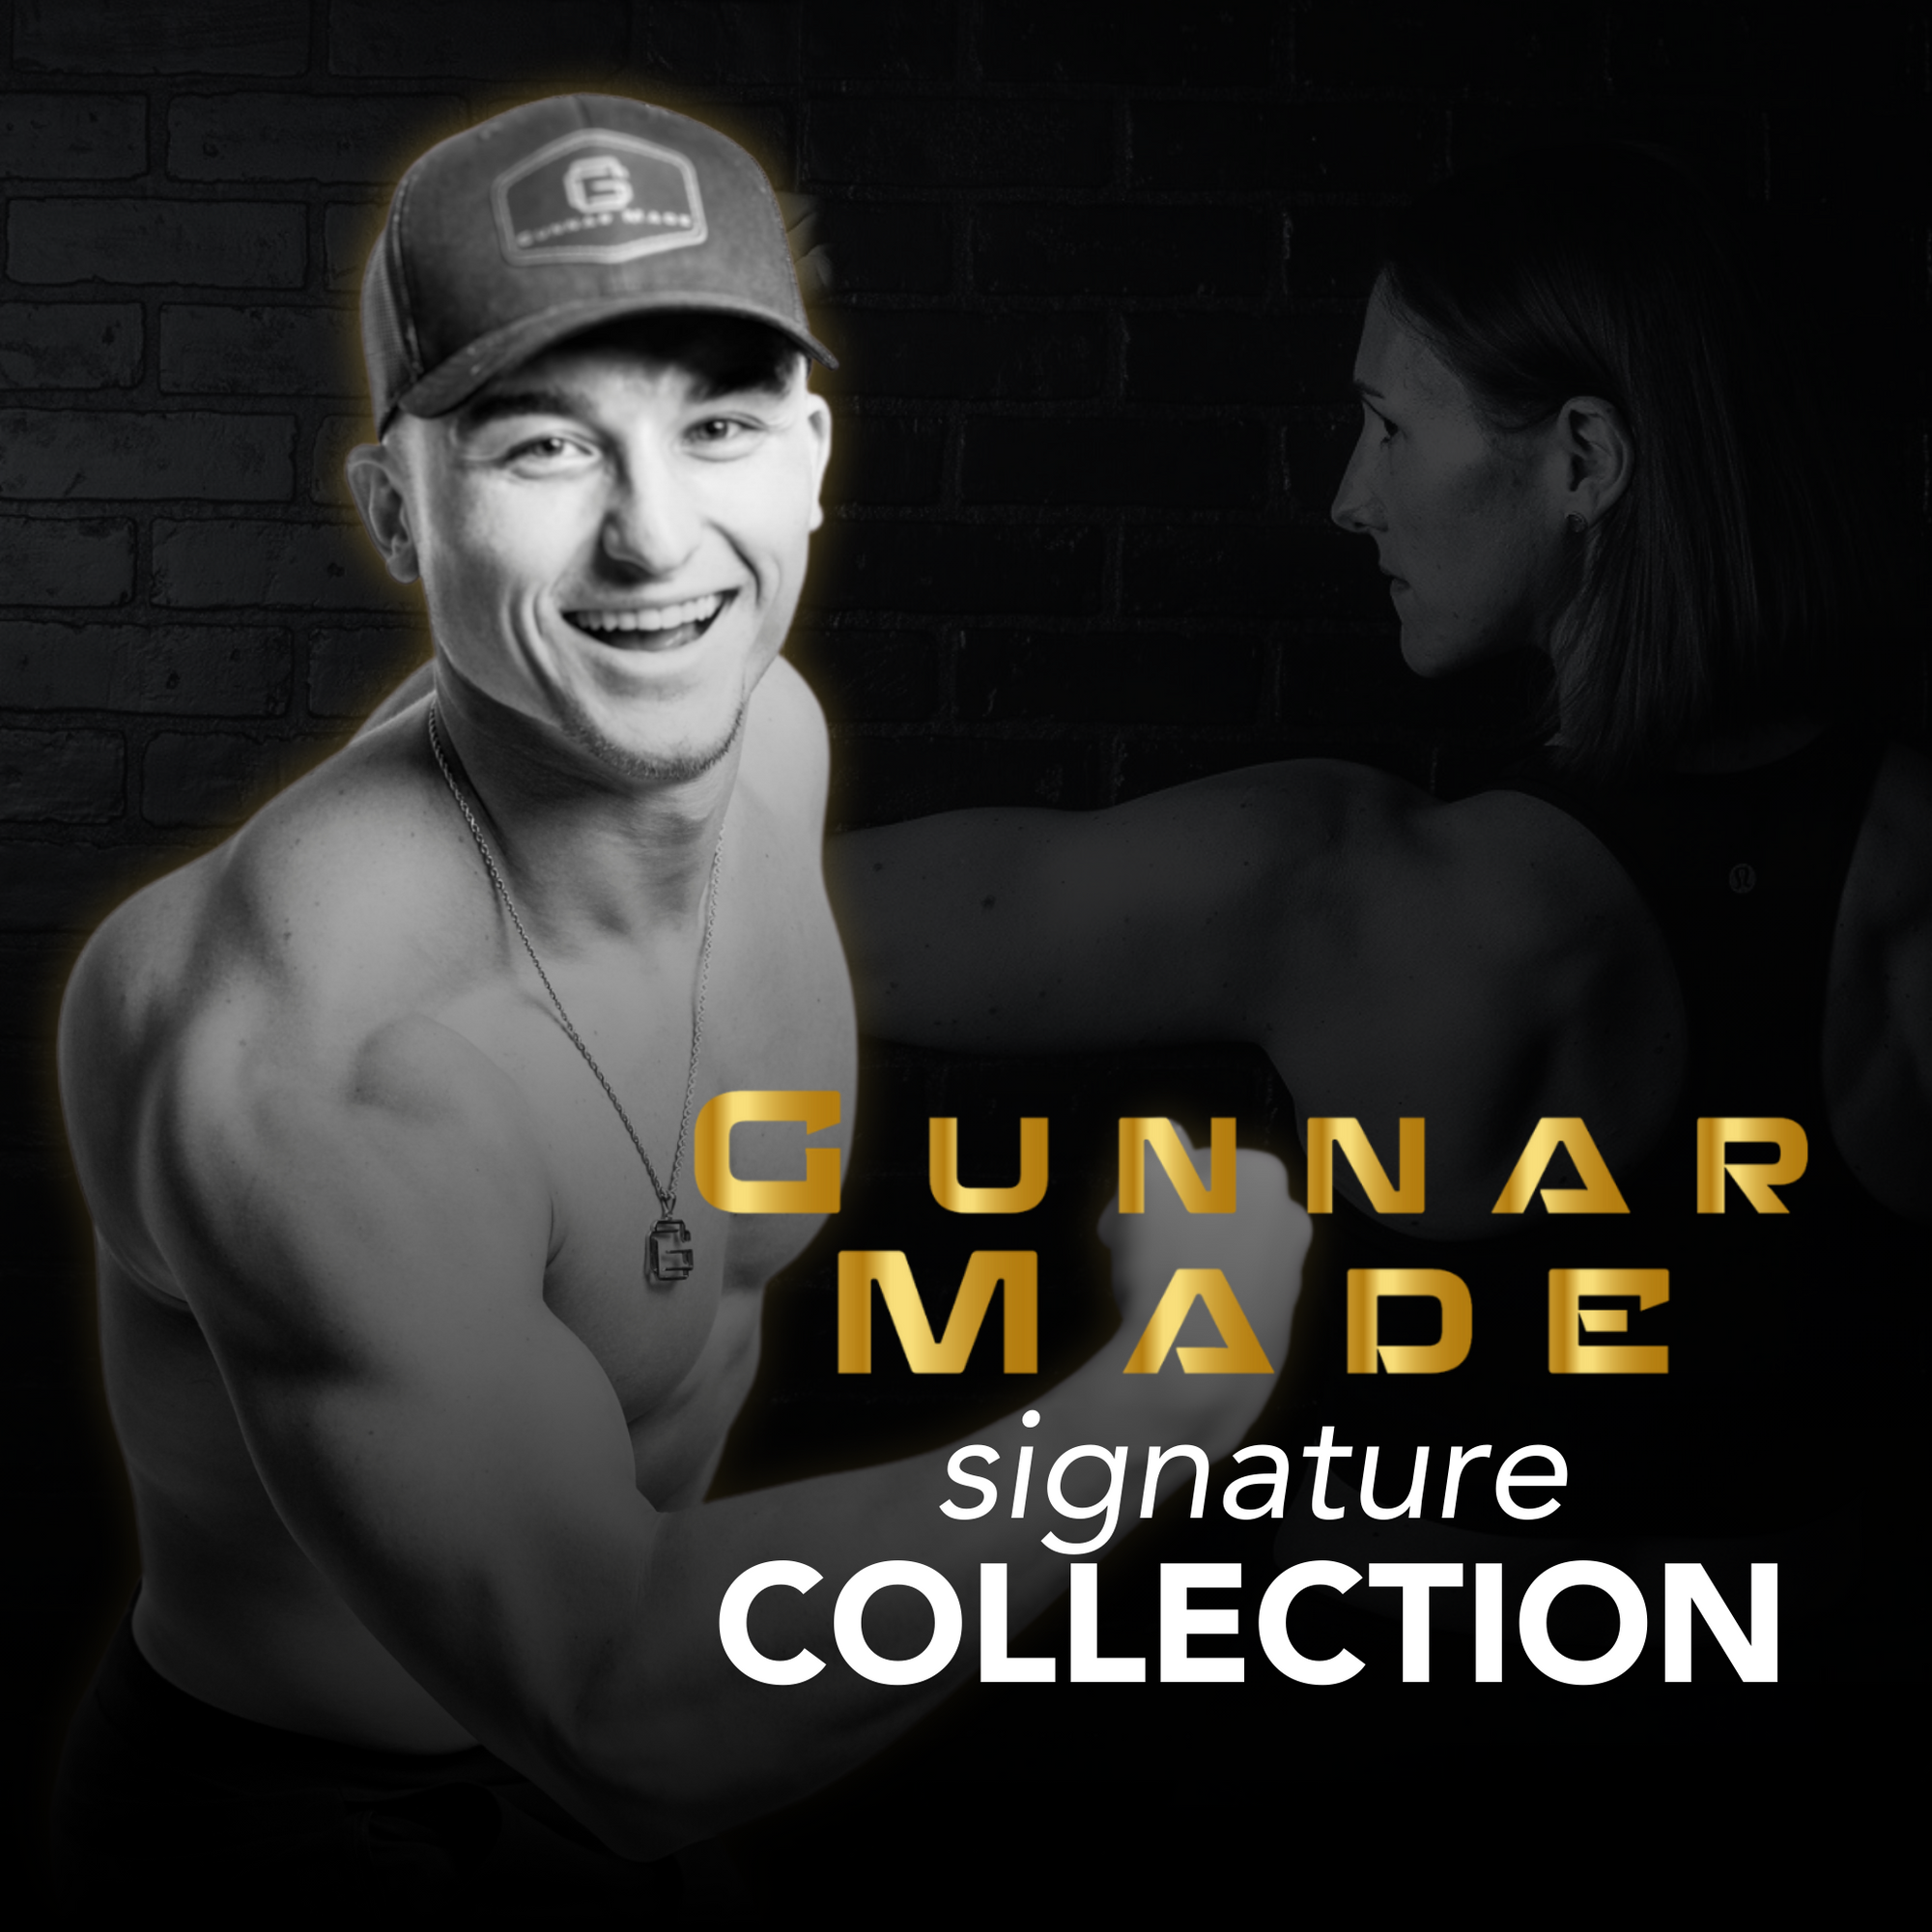 GunnarMade Signature Collection